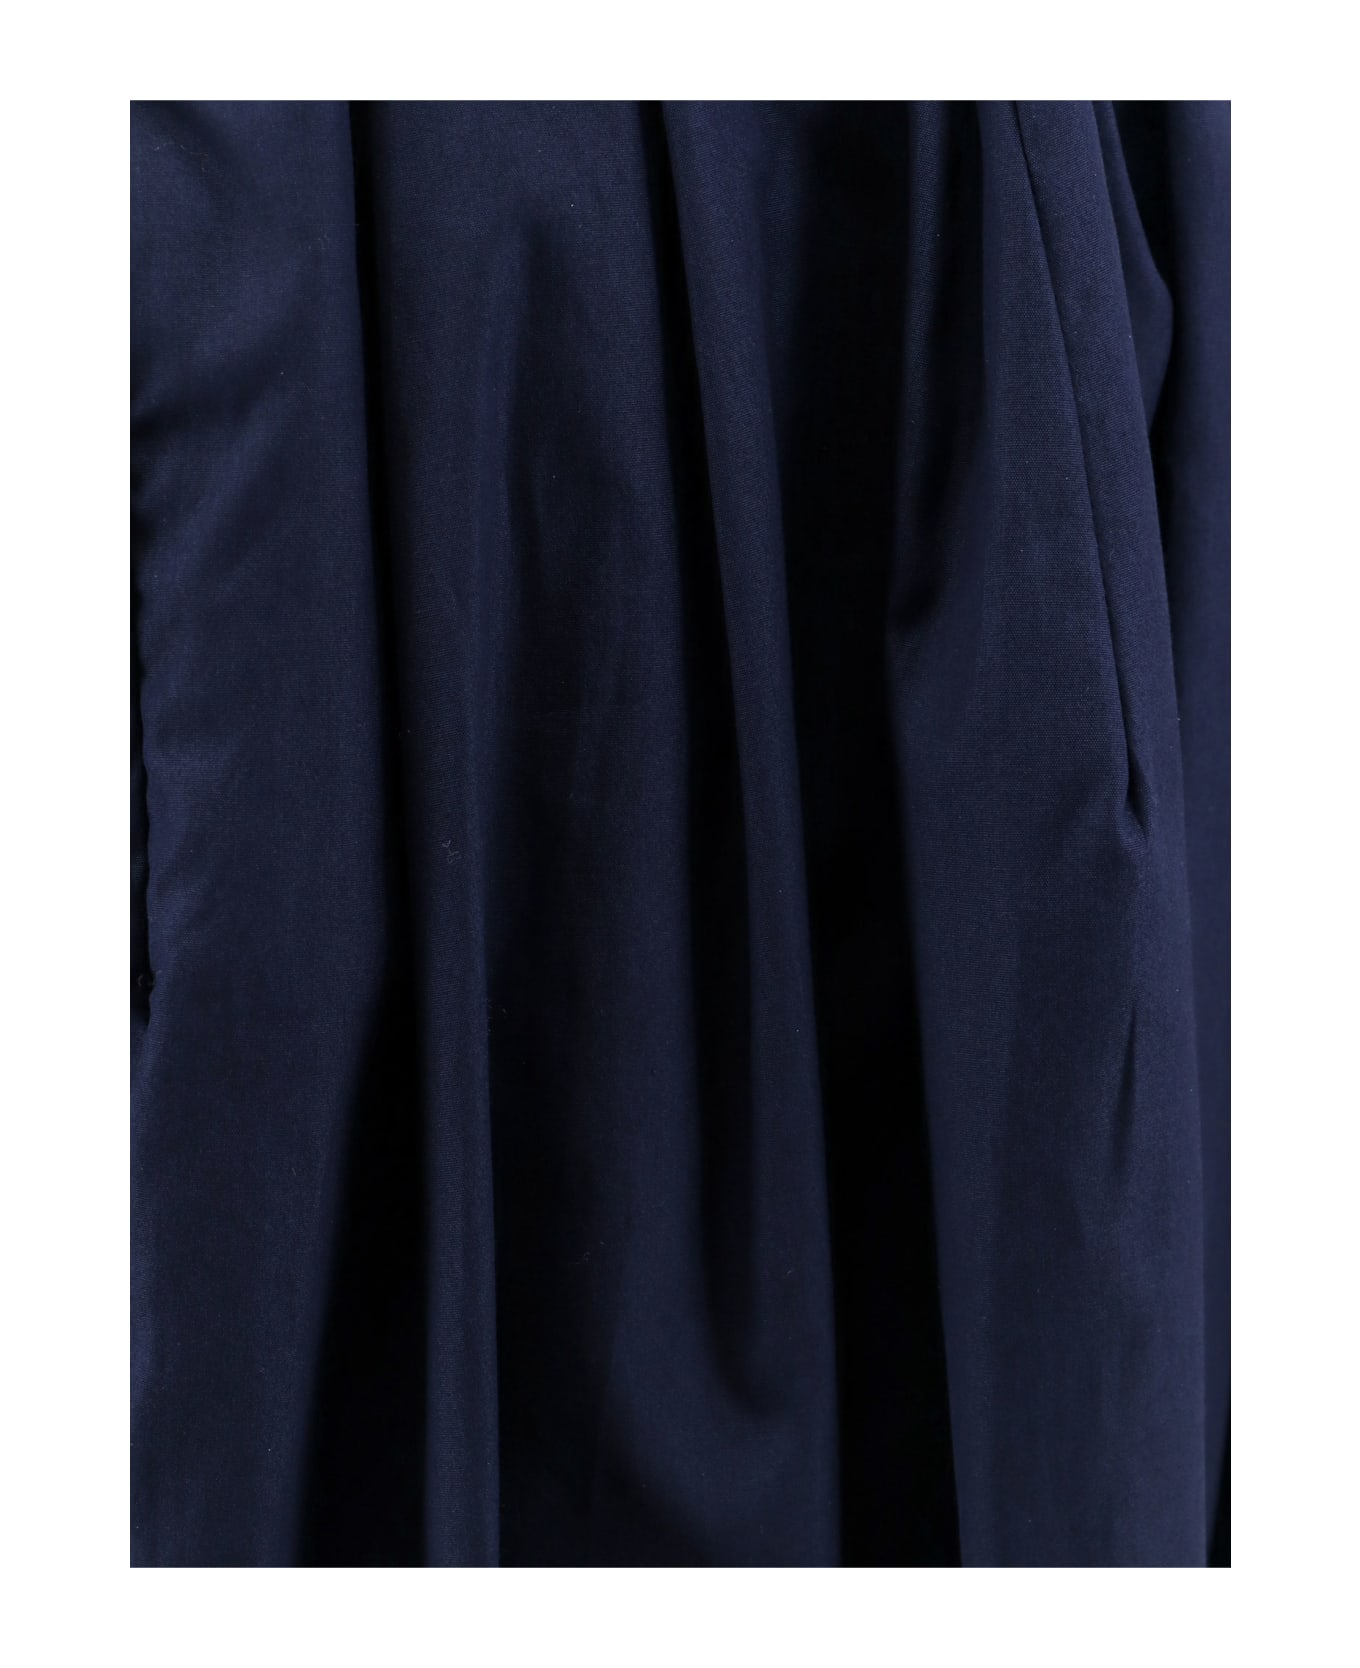 Marni Skirt - Blue スカート